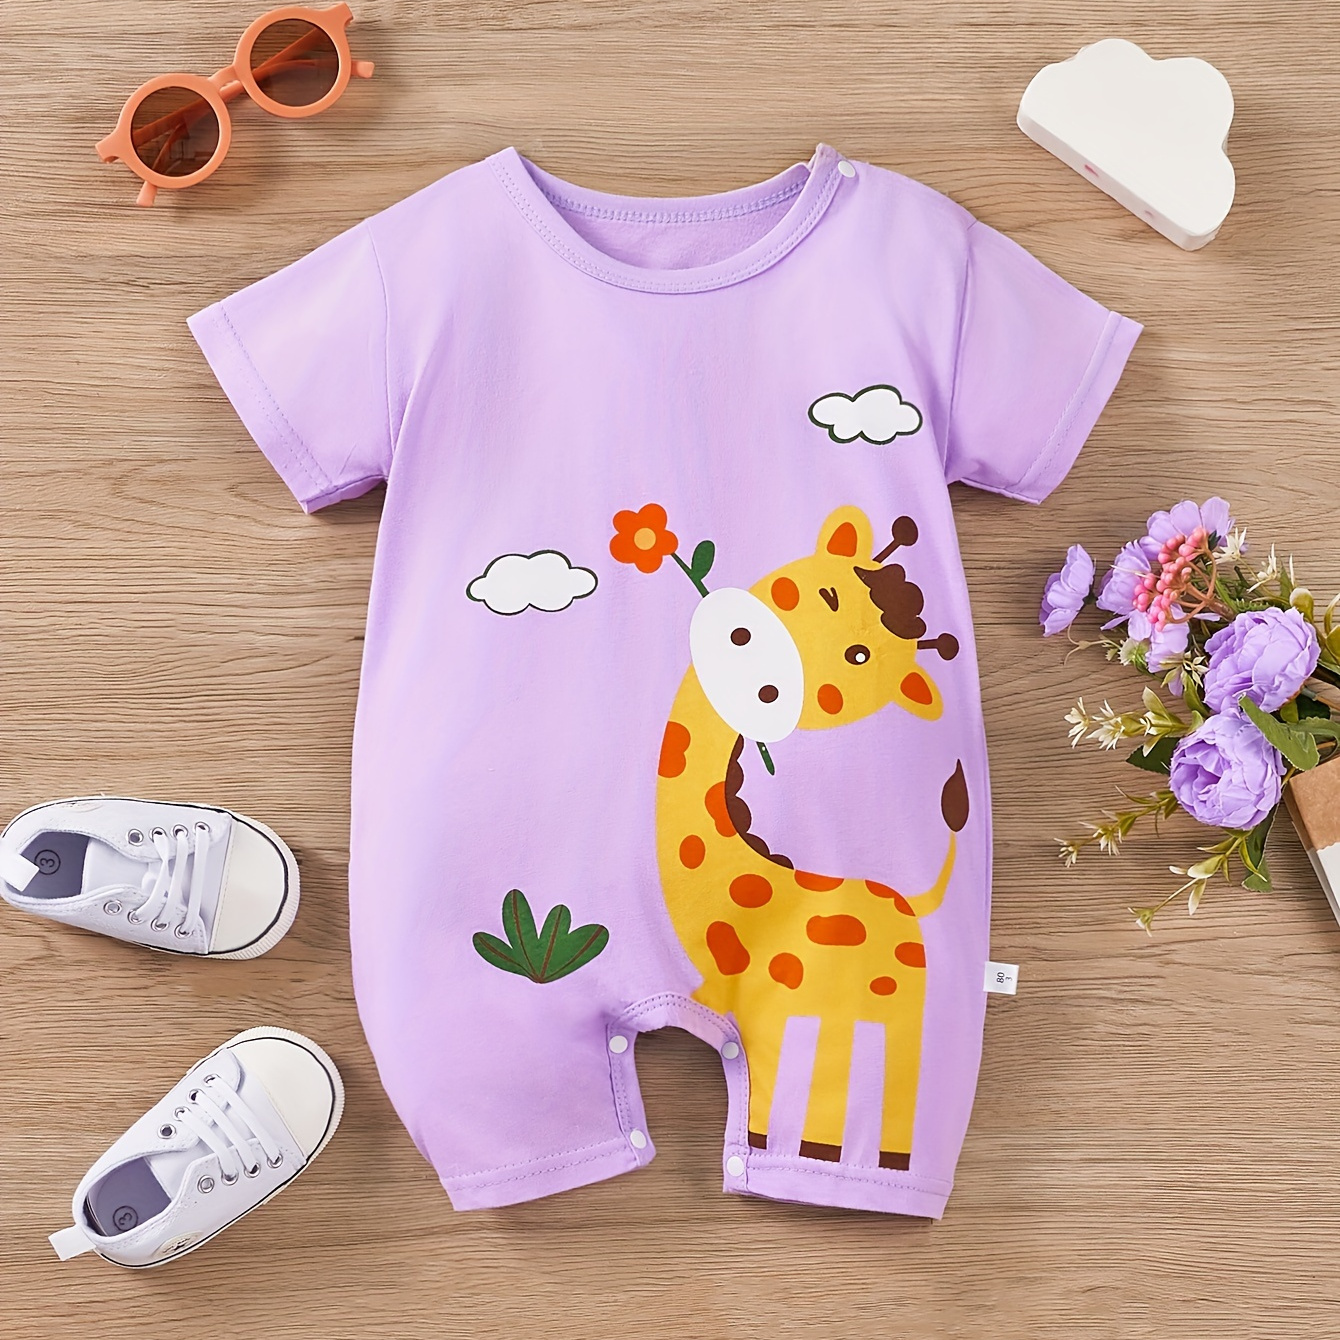 

Infant's Cartoon Giraffe & Cloud Print Bodysuit, Casual Short Sleeve Onesie, Baby Girl's Clothing